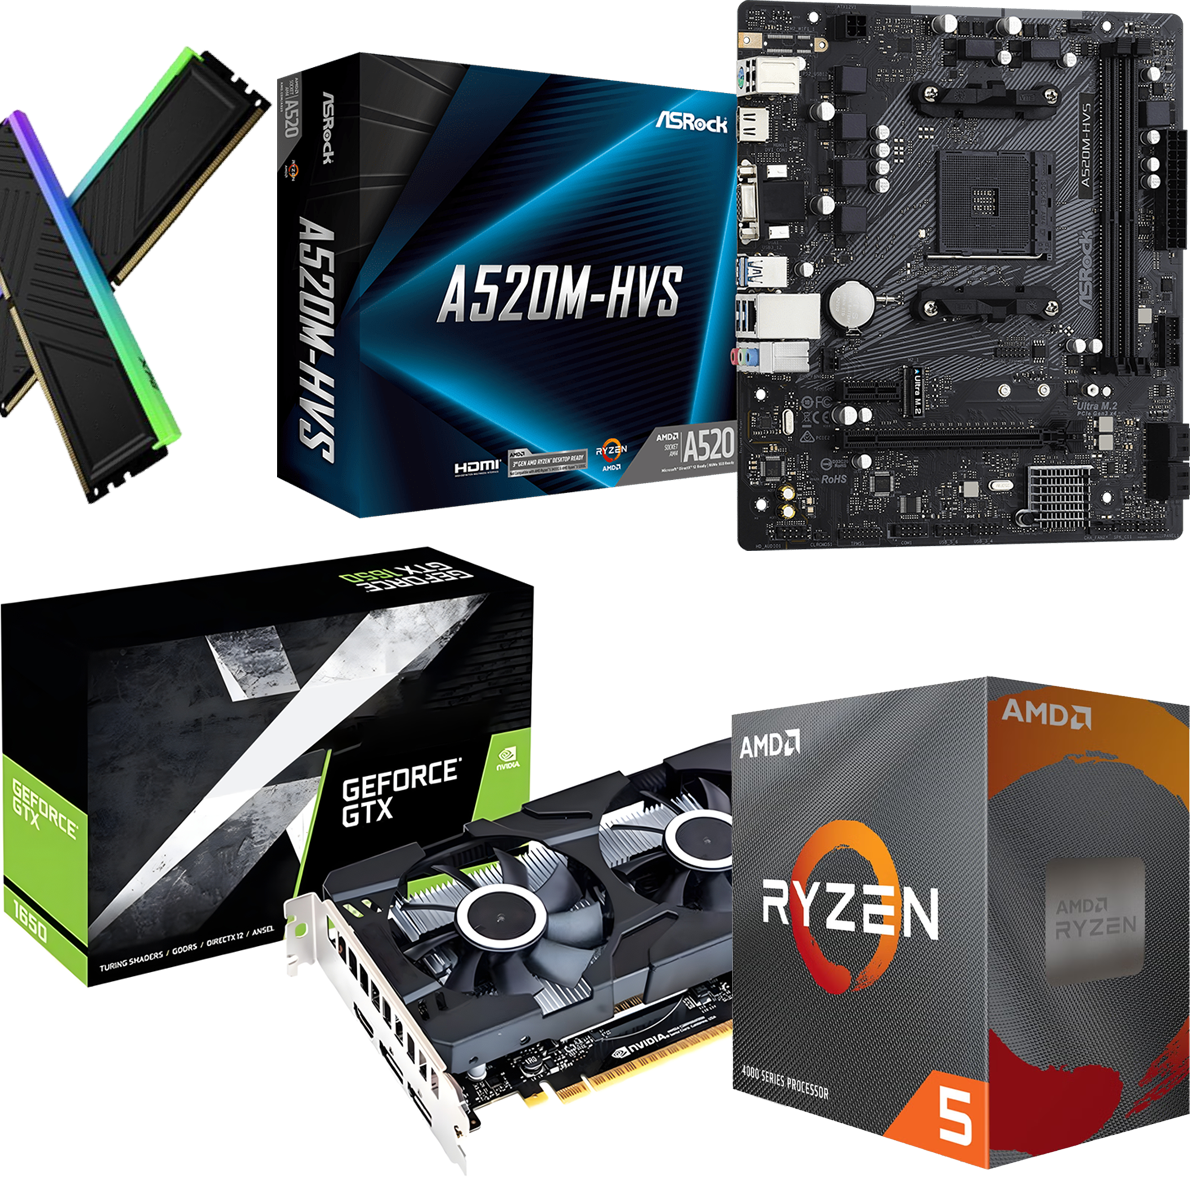 Beginners Fast Gaming PC | AMD Ryzen 5 4500 Processor | 16GB RAM | 512GB SSD | NVIDIA GTX 1650 Graphics Card